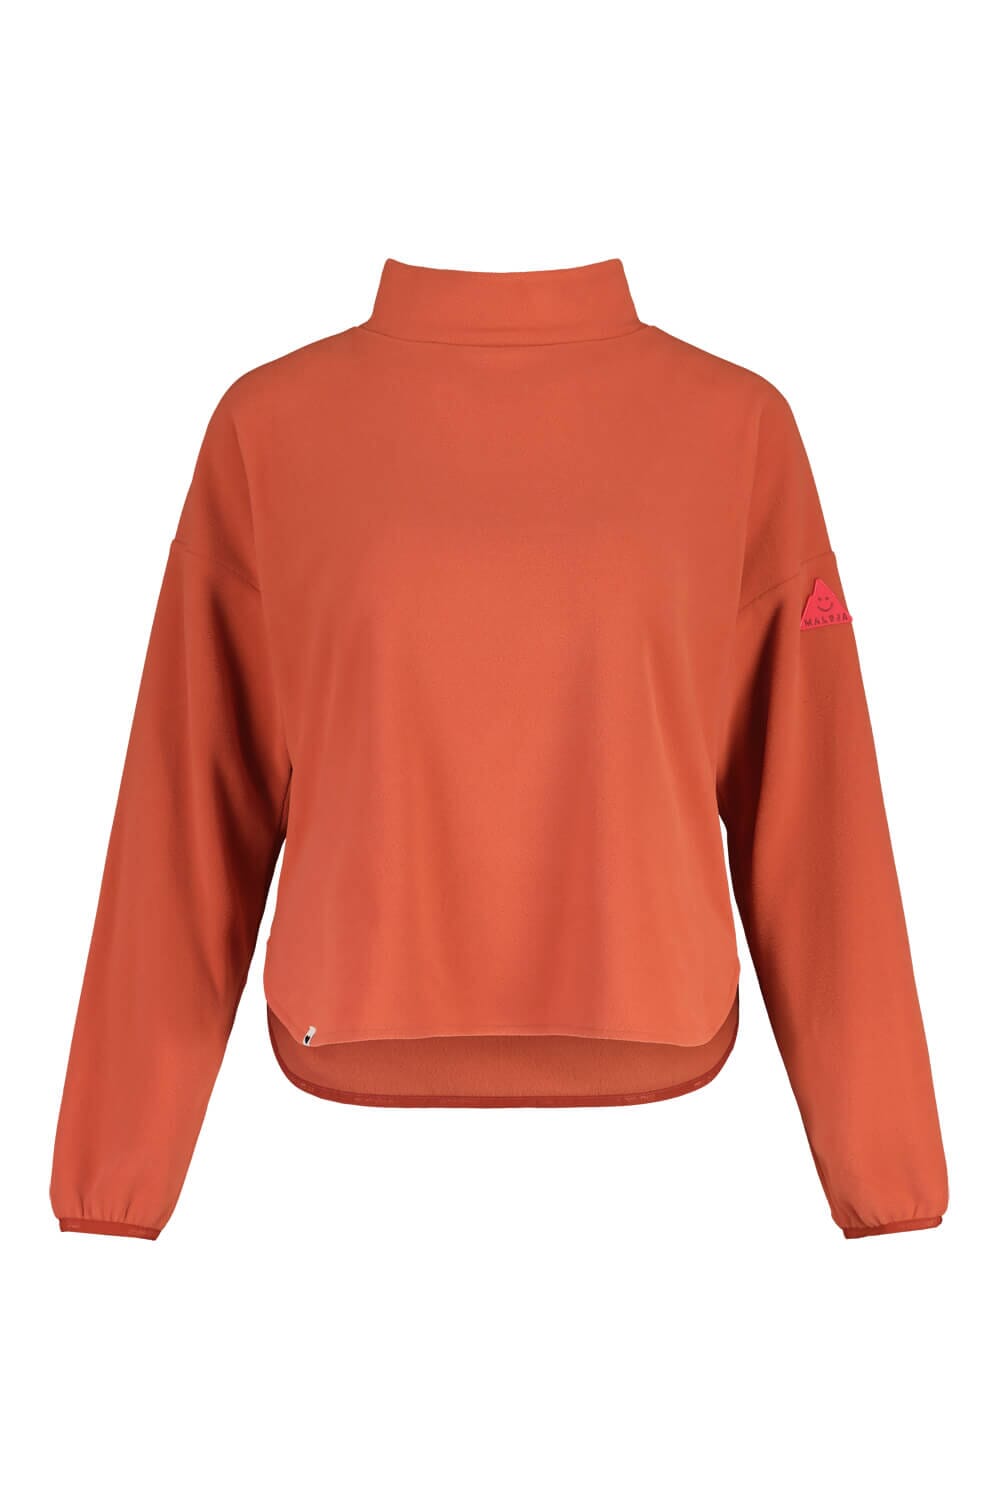 Maloja - W's RomaliaM. Mountain Fleece Shirt - 100% Recycled Polyester - Weekendbee - sustainable sportswear